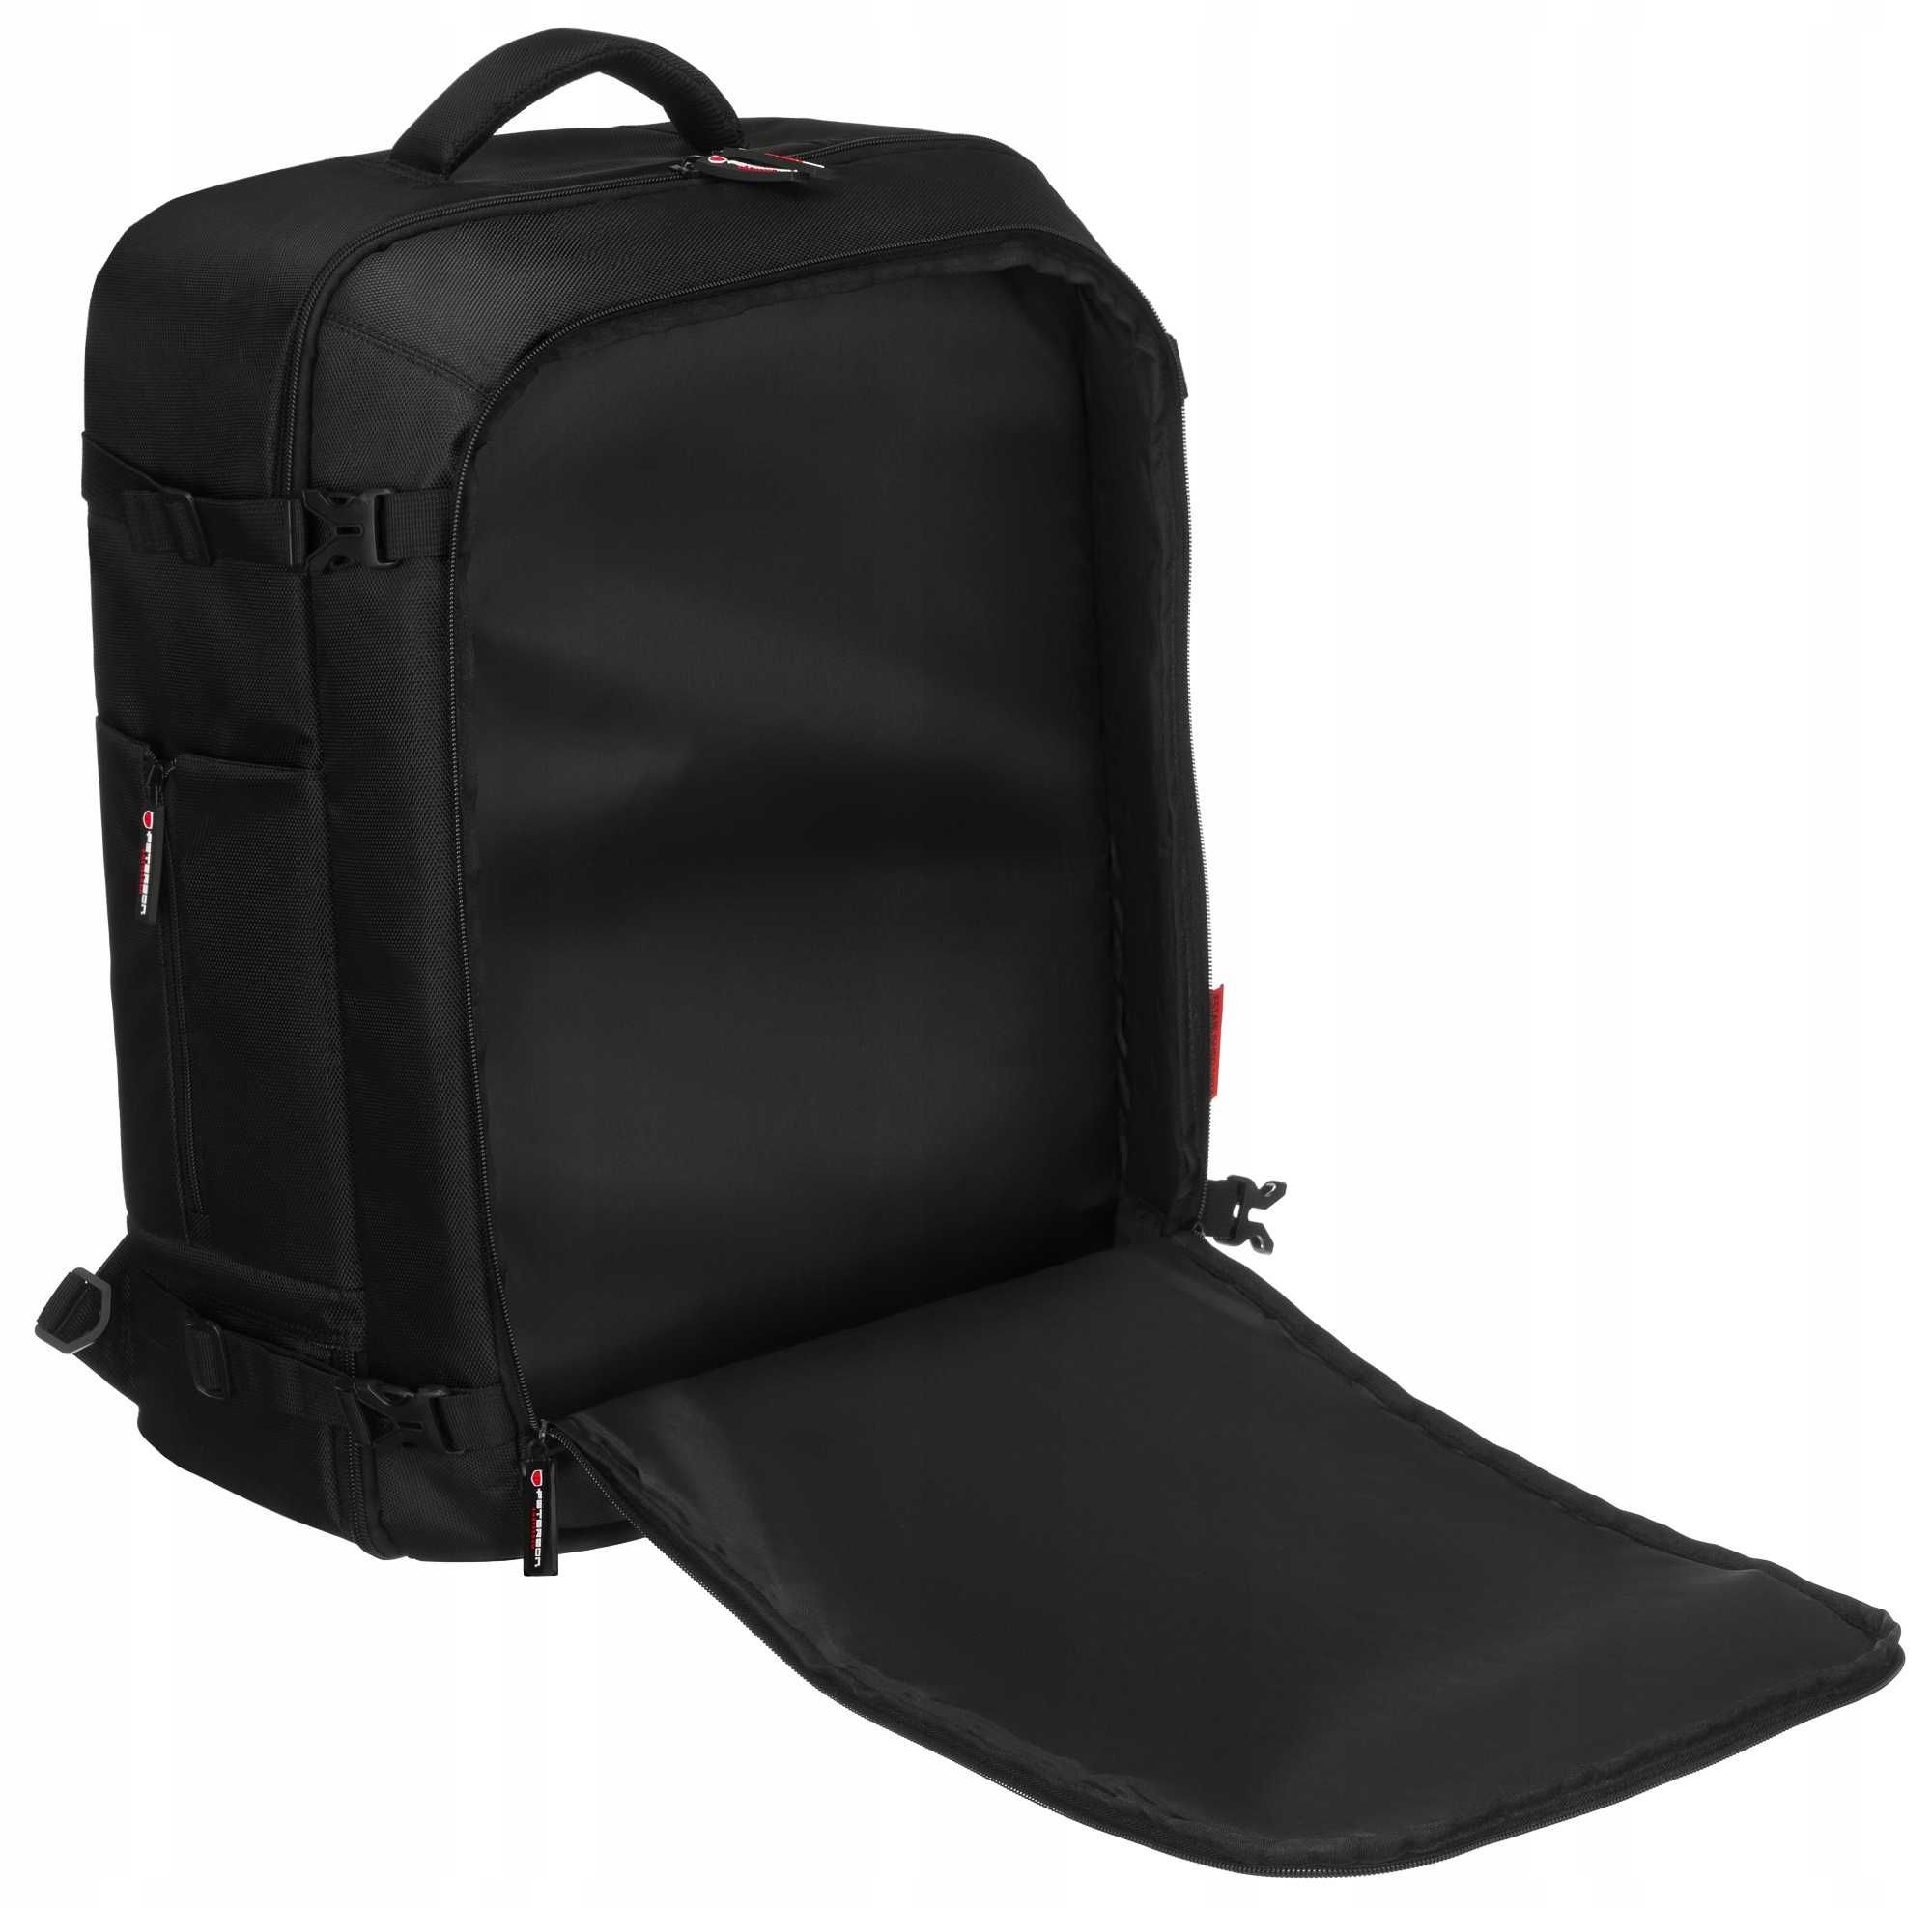 PETERSON solidny duży plecak podróżny na laptopa czarny bagaż torba